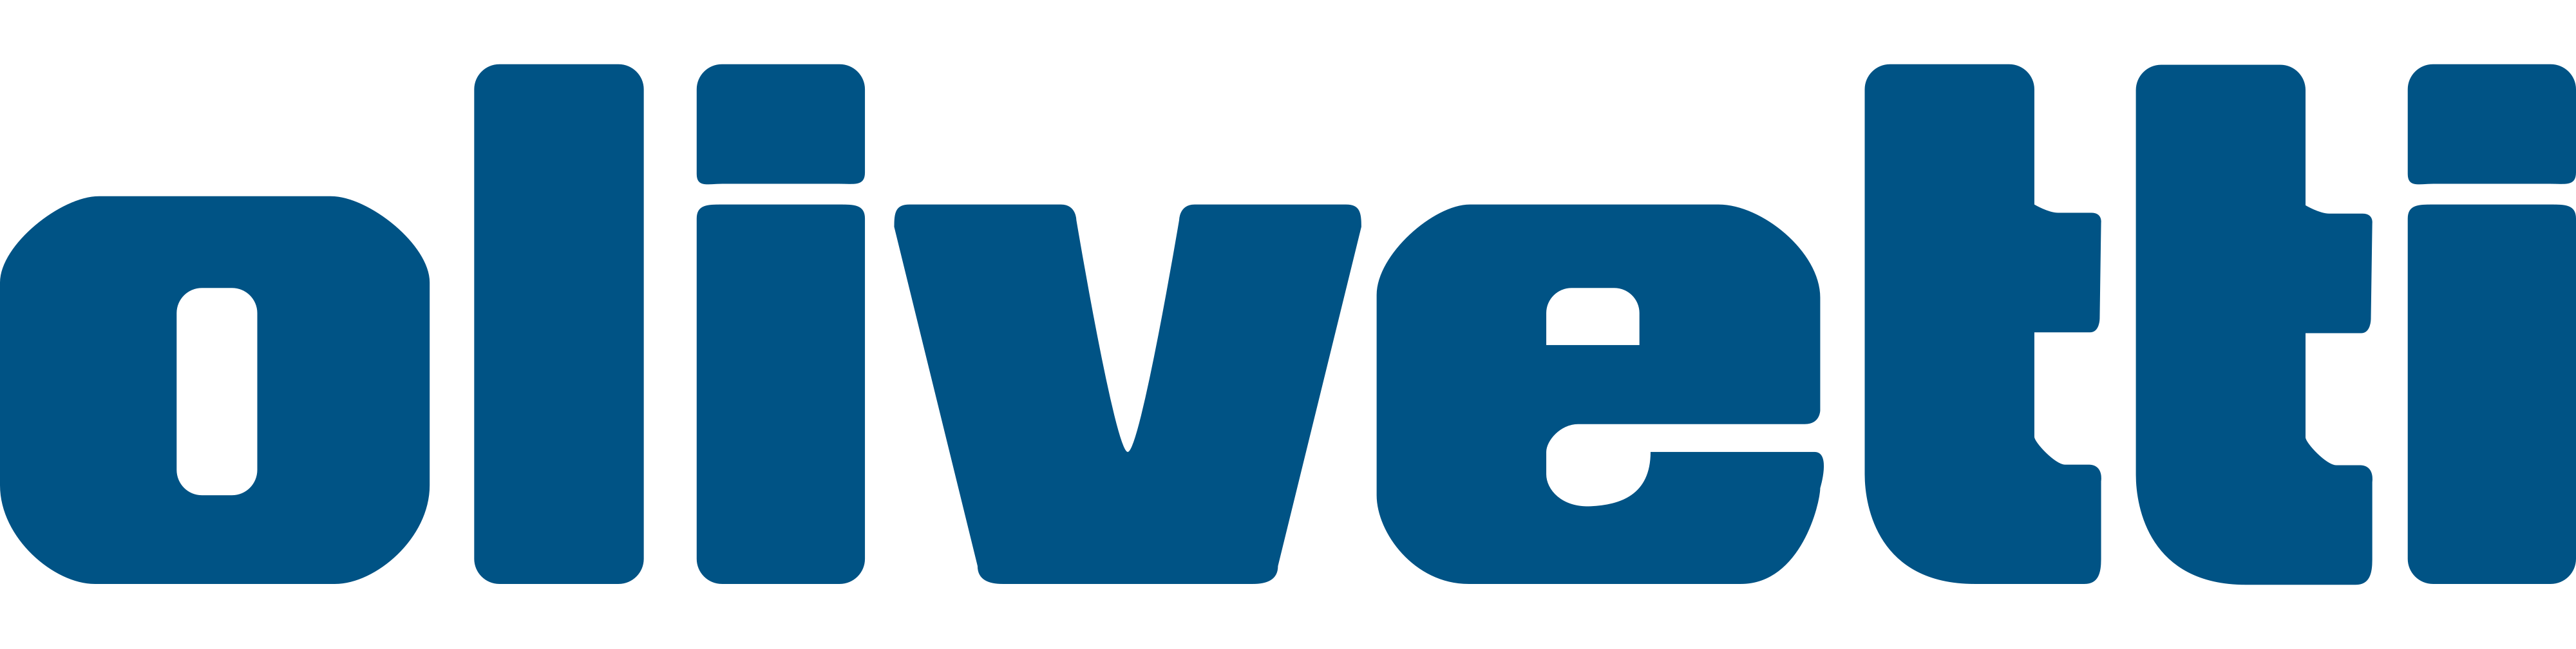 olivetti-logo-big